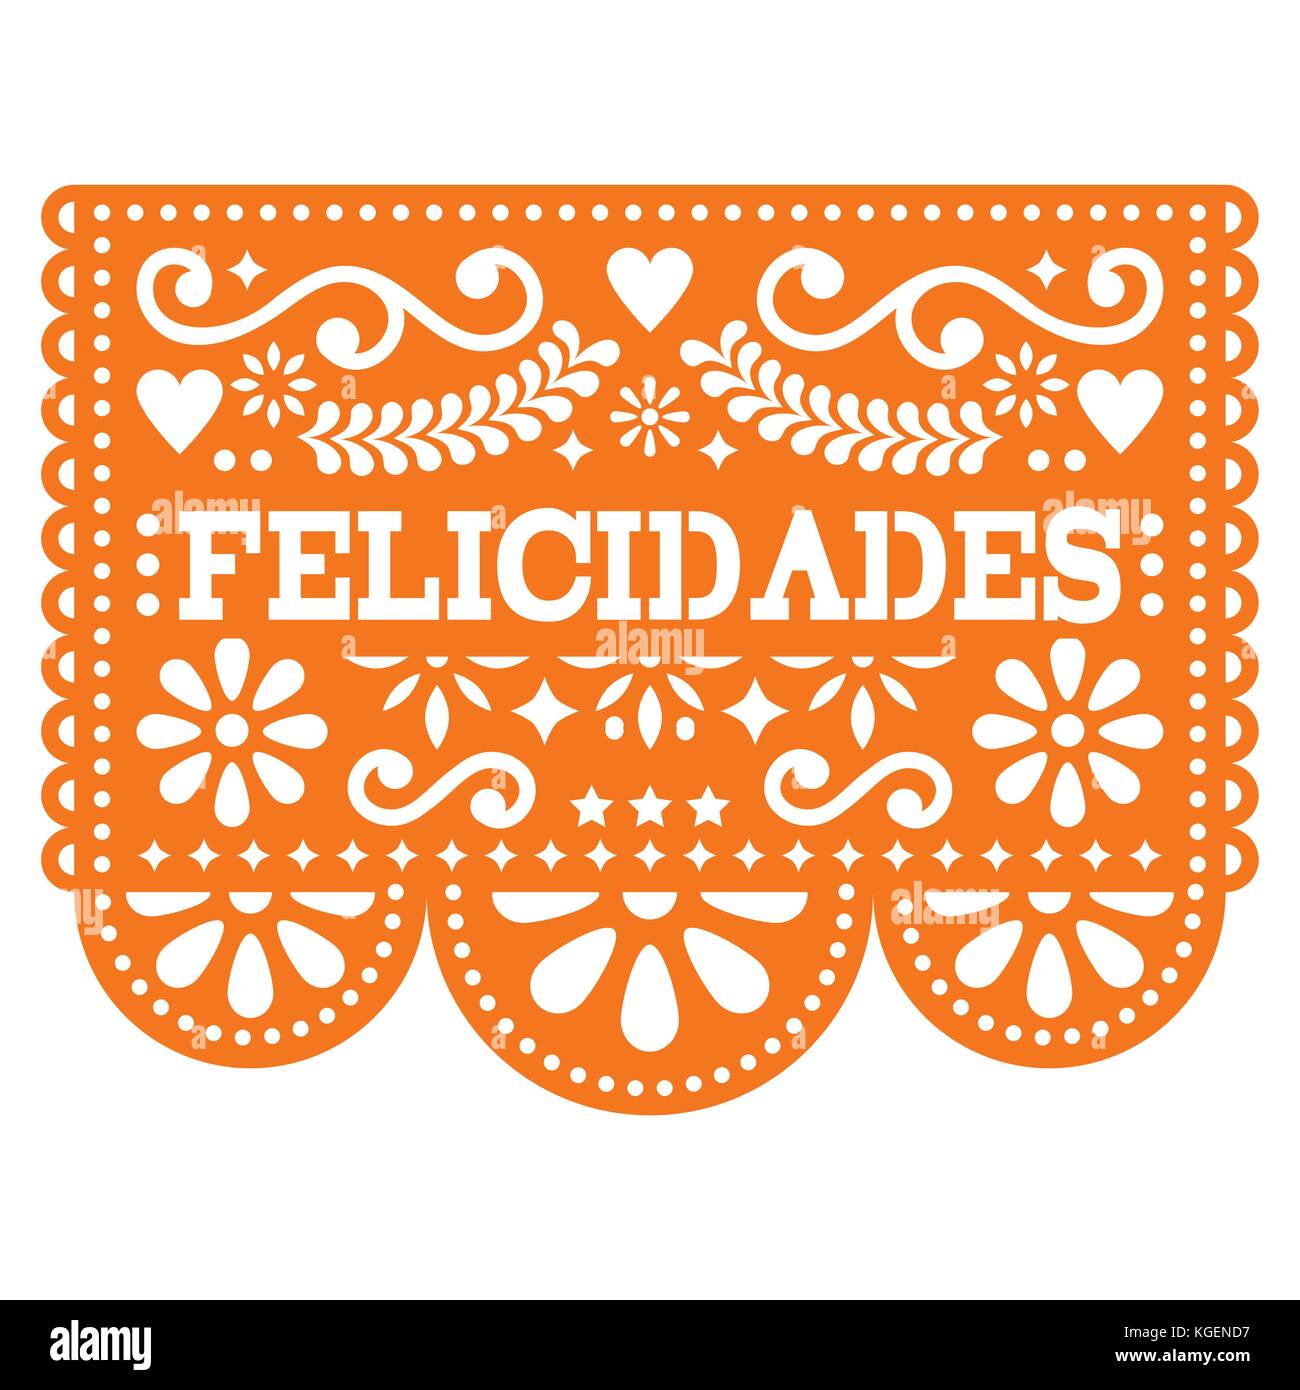 Felicidades Papel Picado vector design - gratulations design, Mexican paper decoration with pattern and text Stock Vector